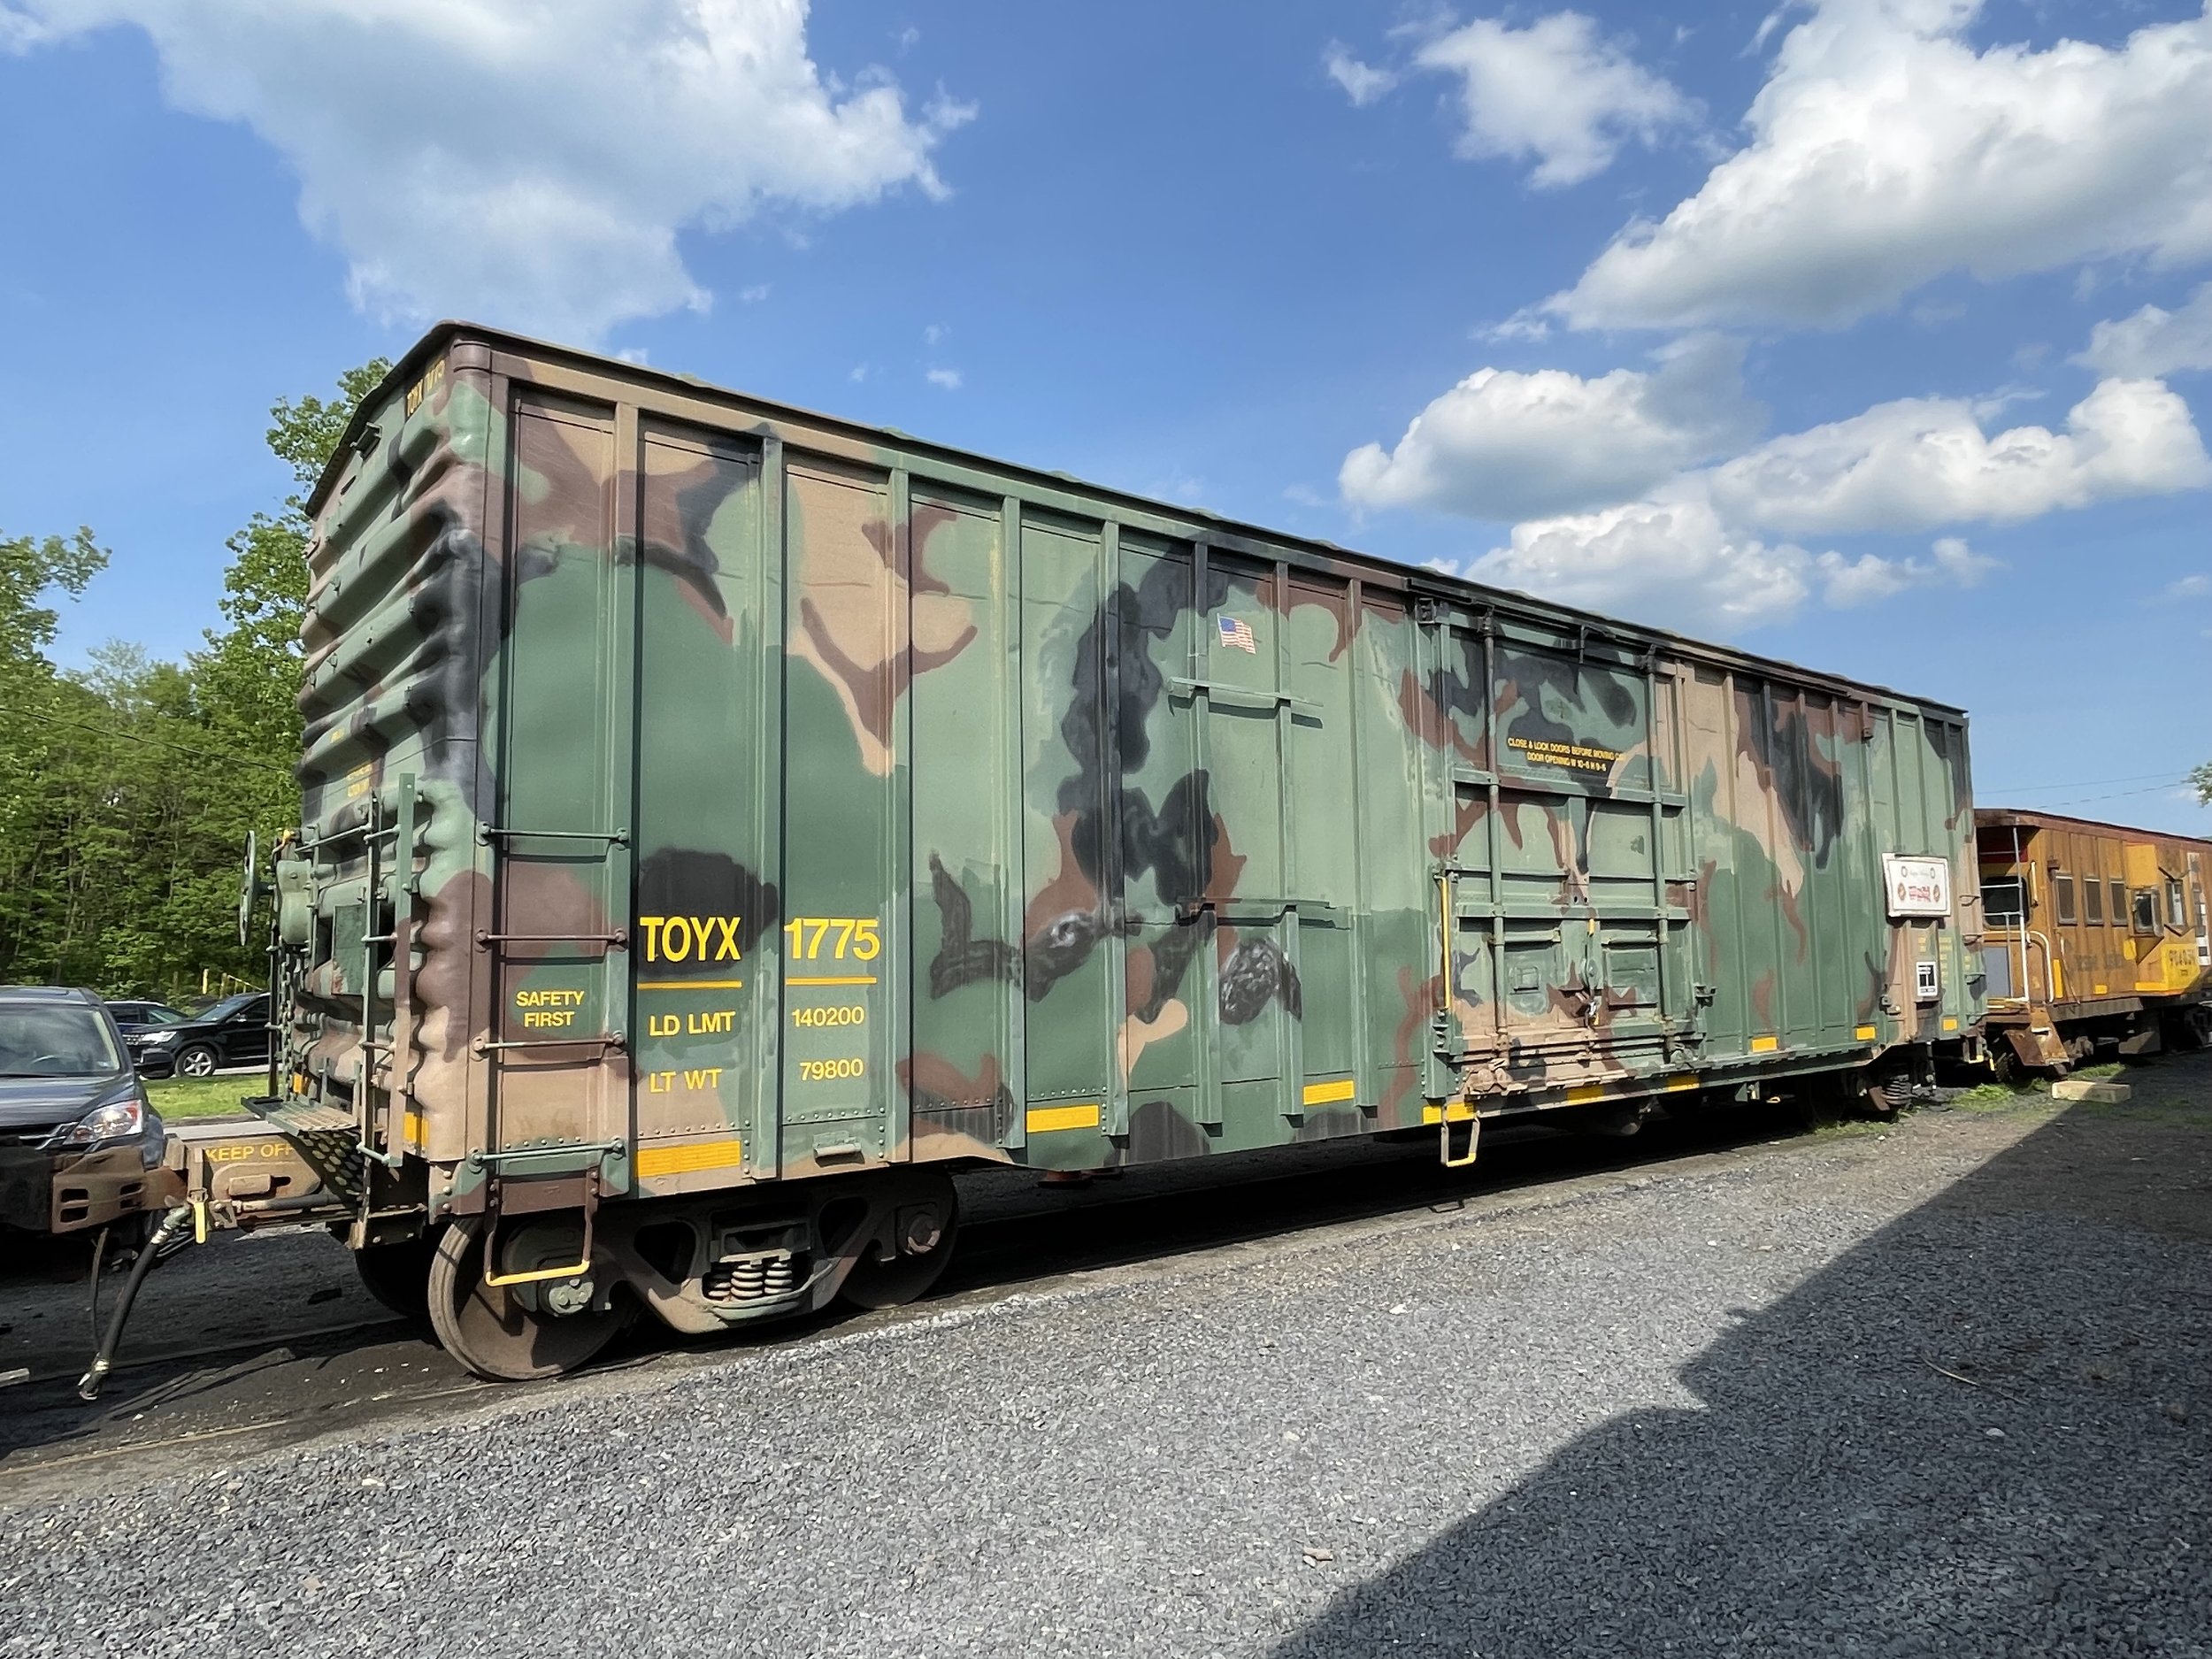 Operation Toy Train boxcar 1775